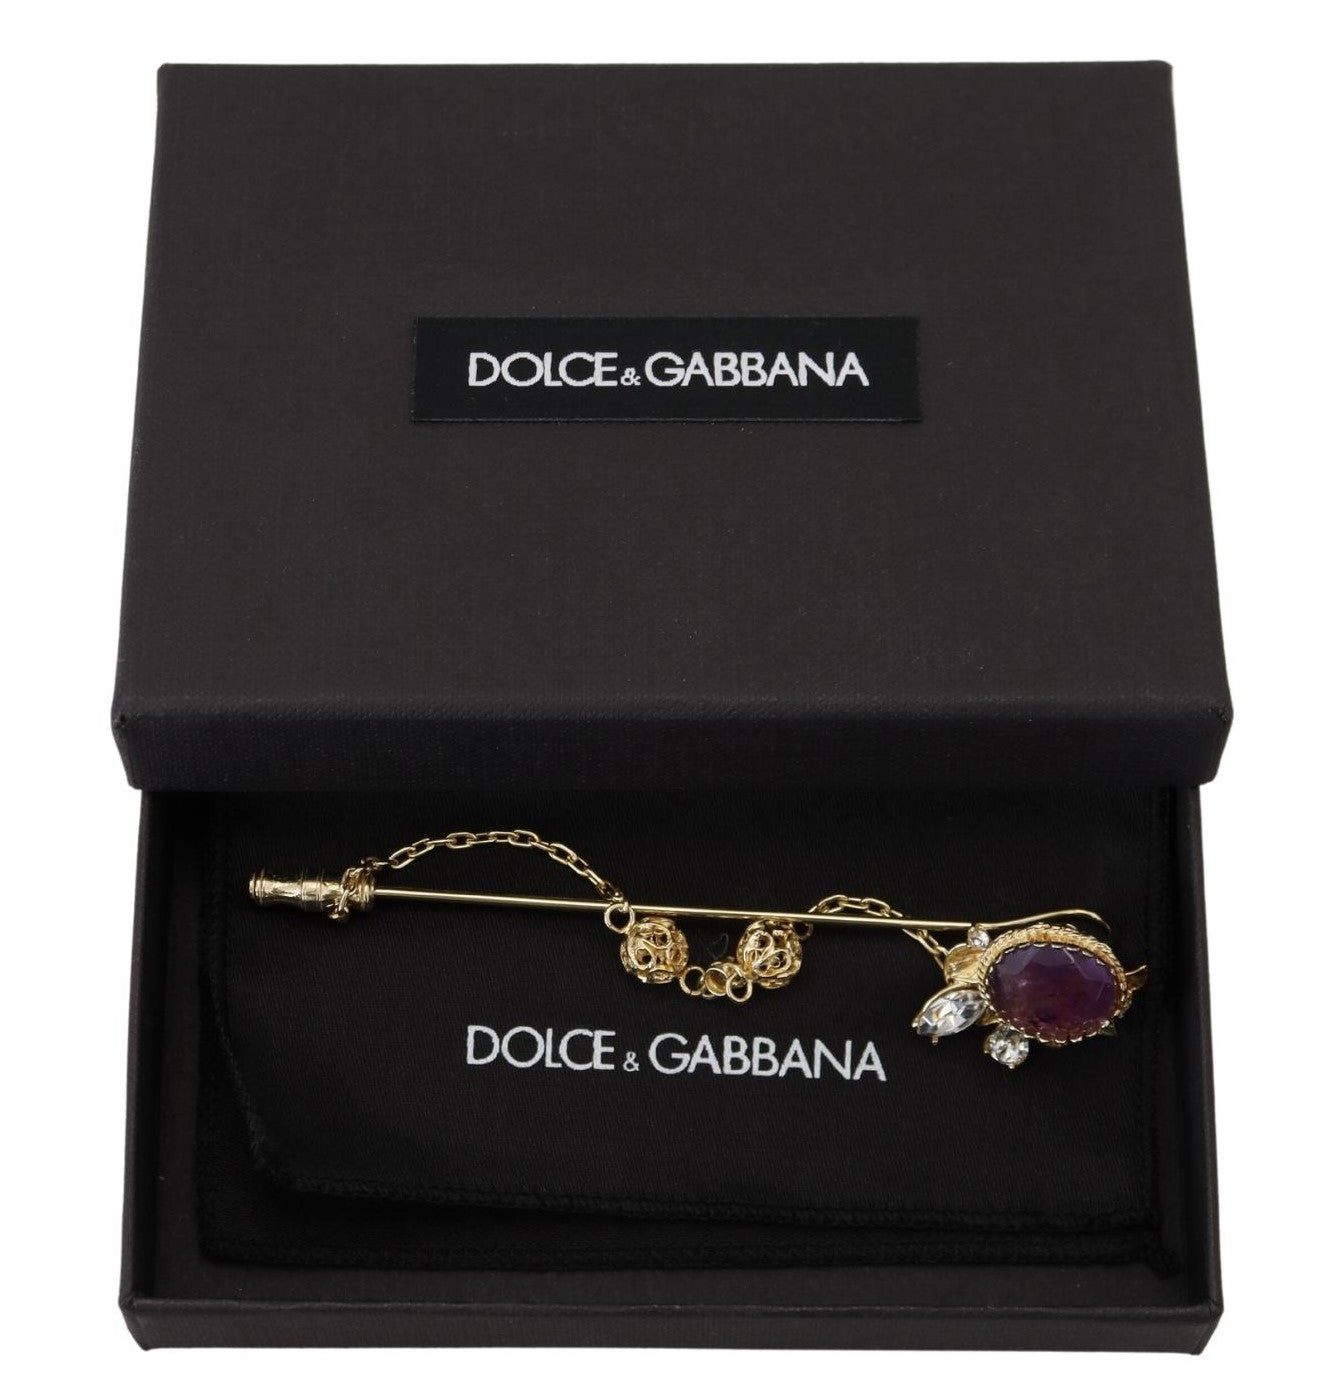 Dolce & Gabbana Elegant Sterling Silver Brooch Pin